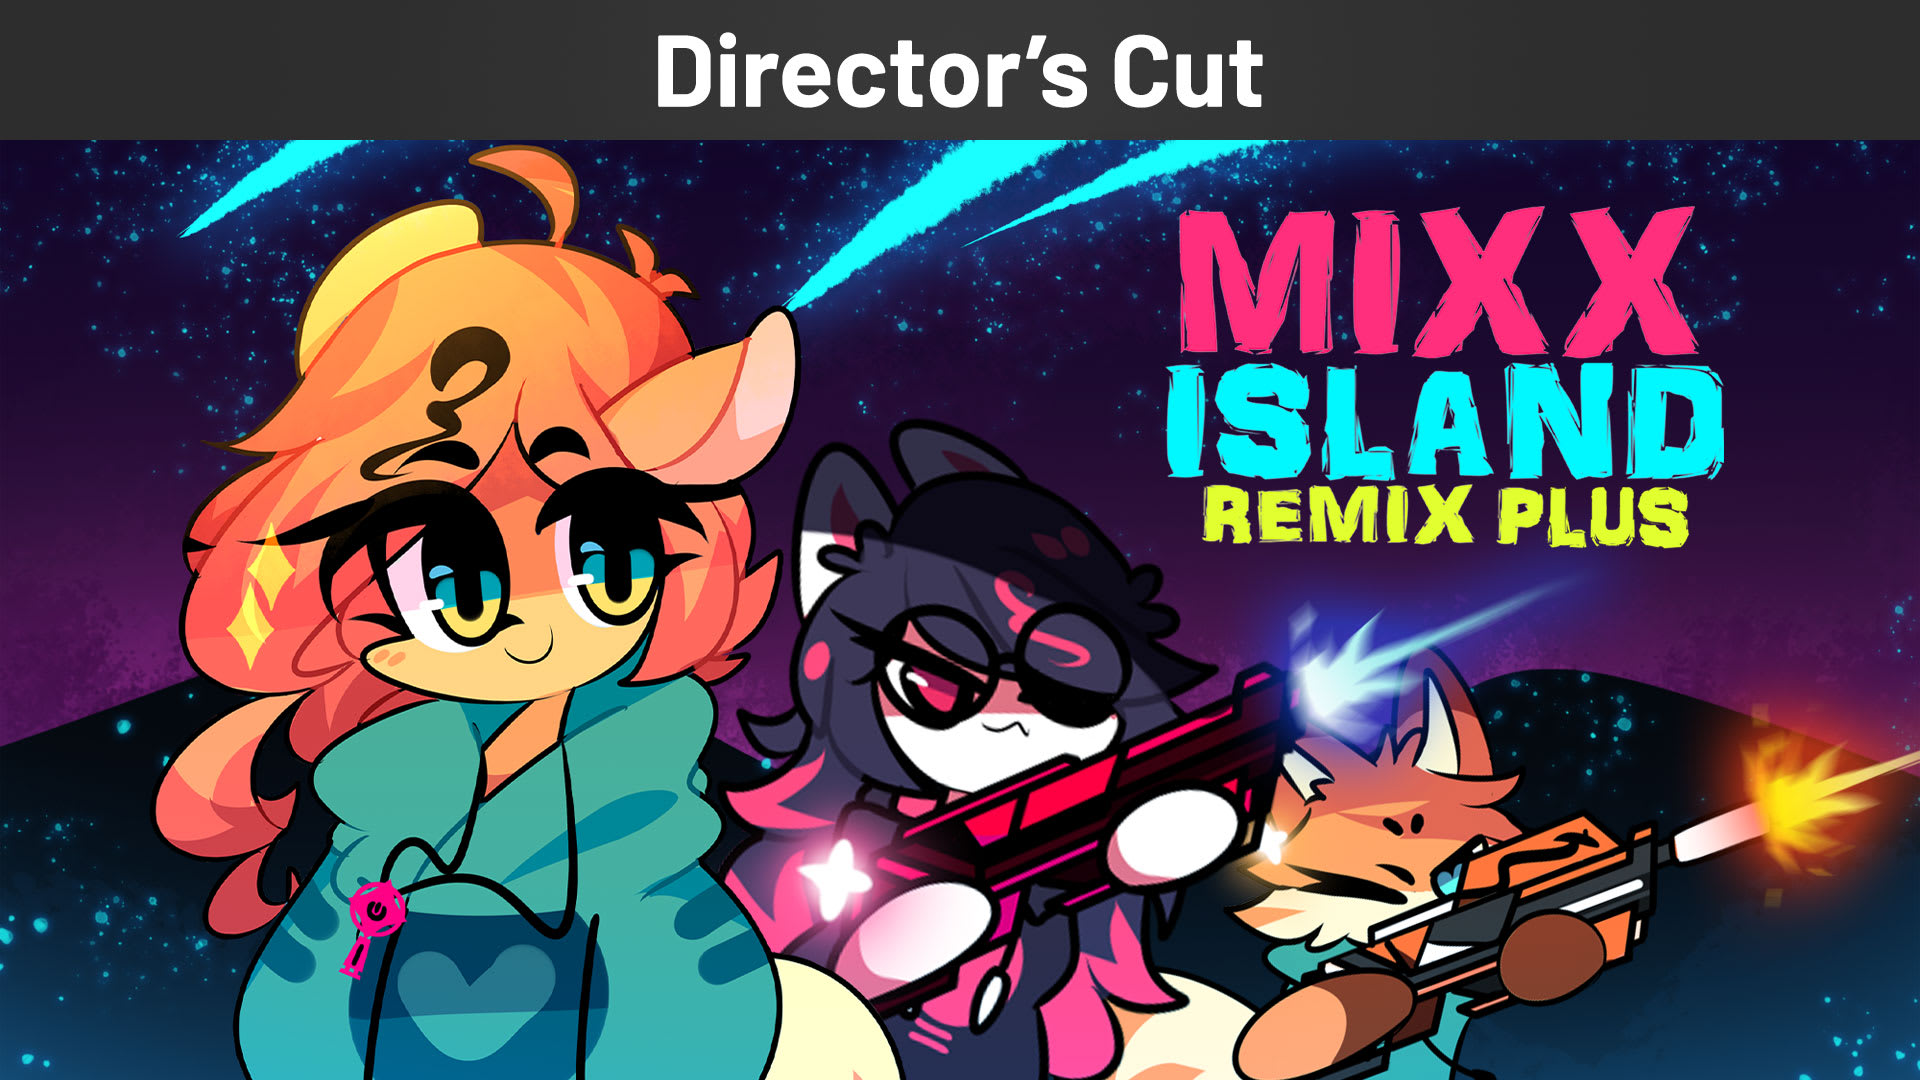 Mixx Island: Remix Plus Director's Cut